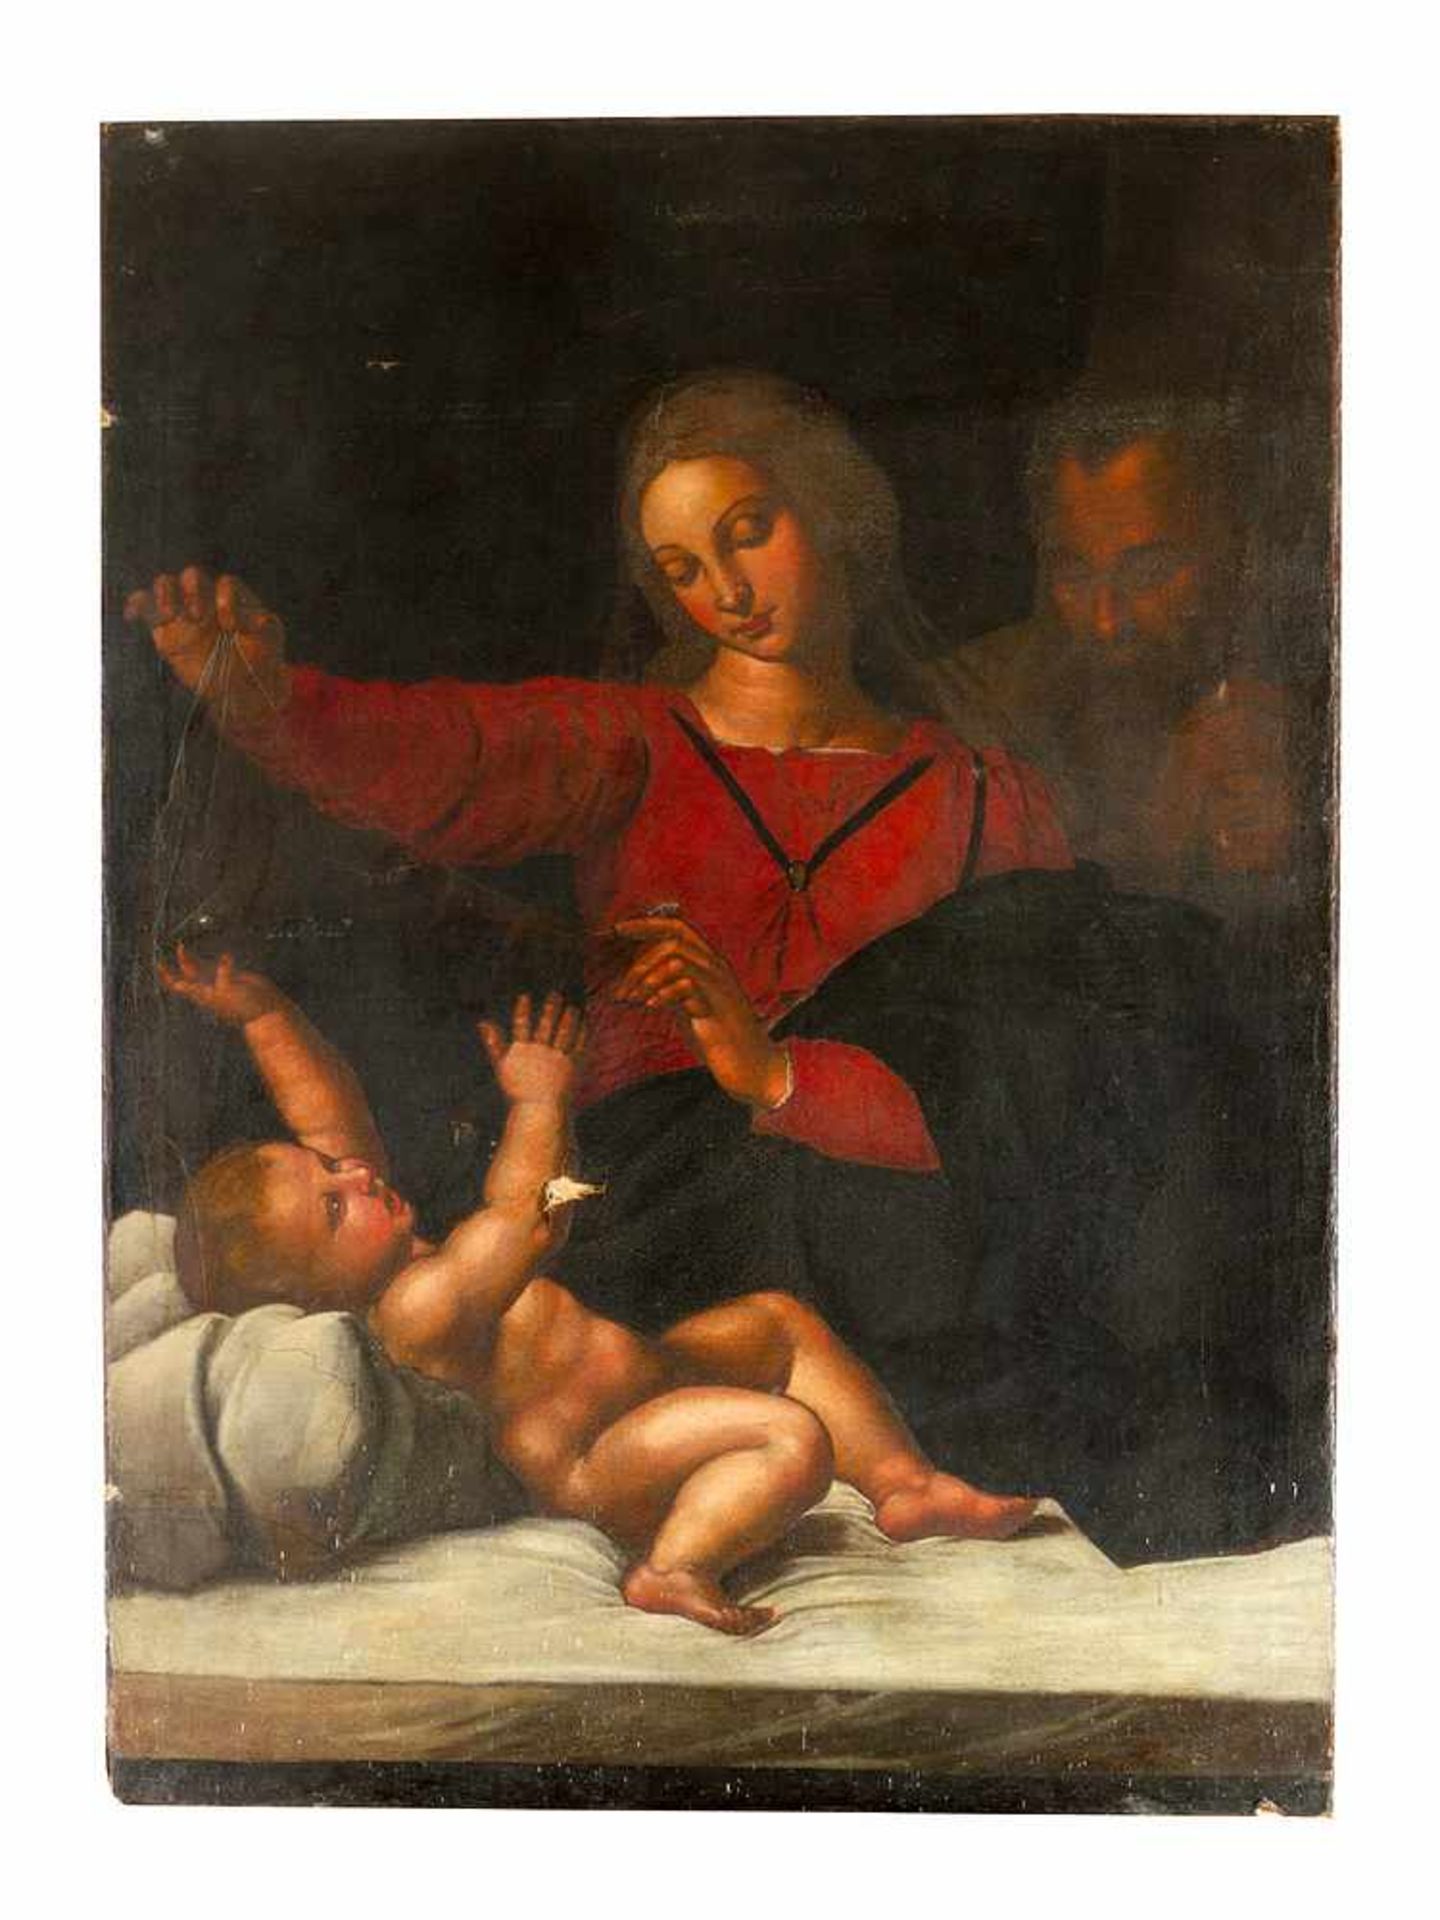 Italian school 17th century. The holy family. Oil on canvas. 122*89